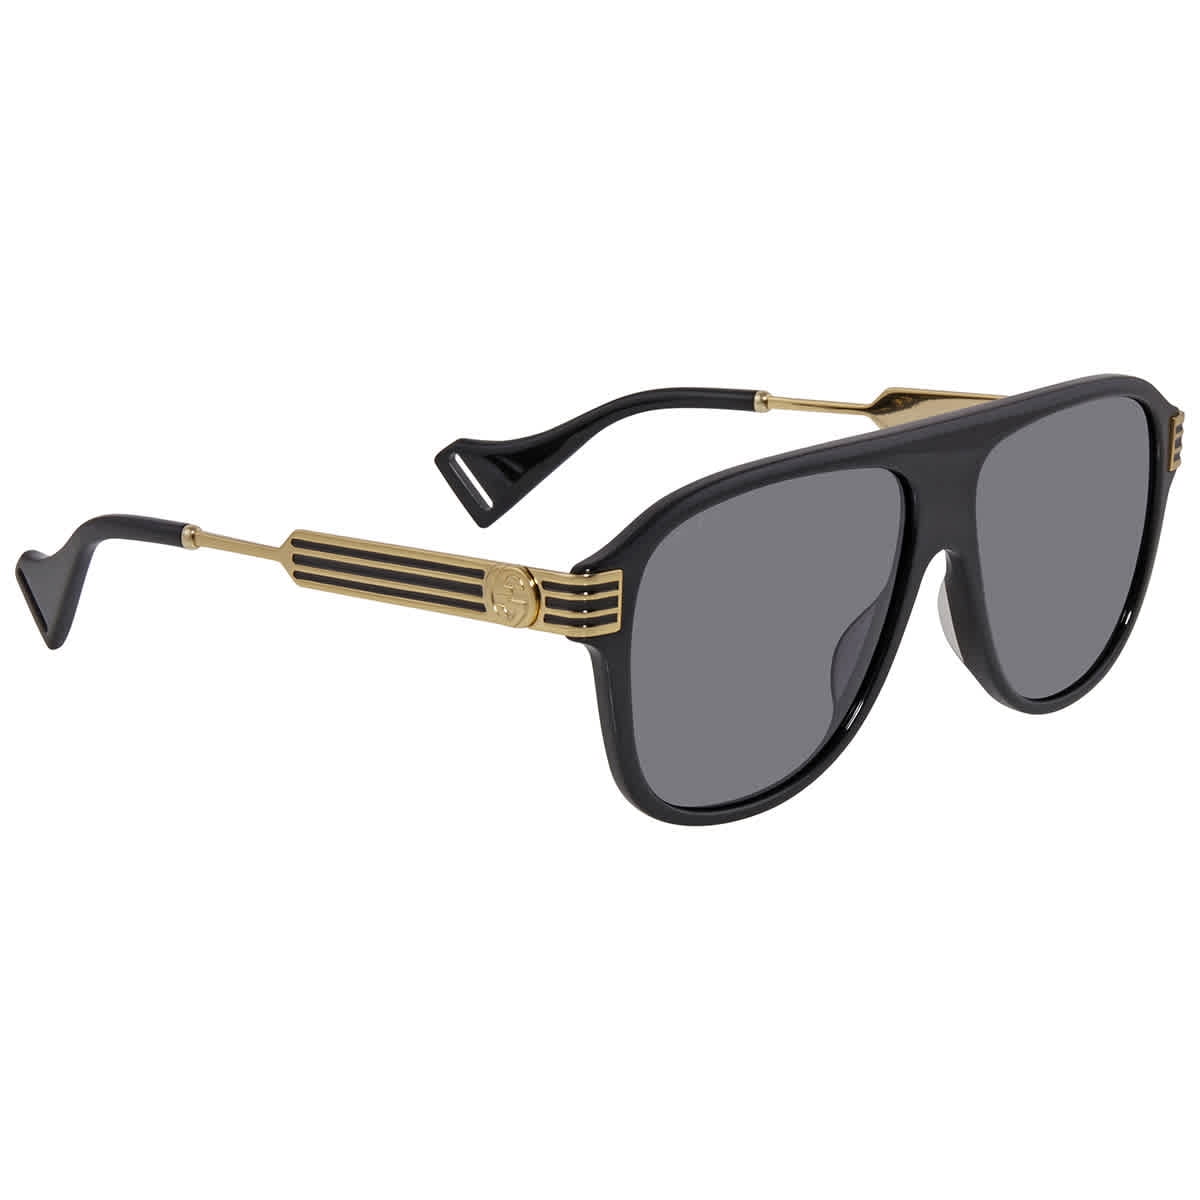 Gucci Grey Sunglasses GG0587S 001 57 - Walmart.com